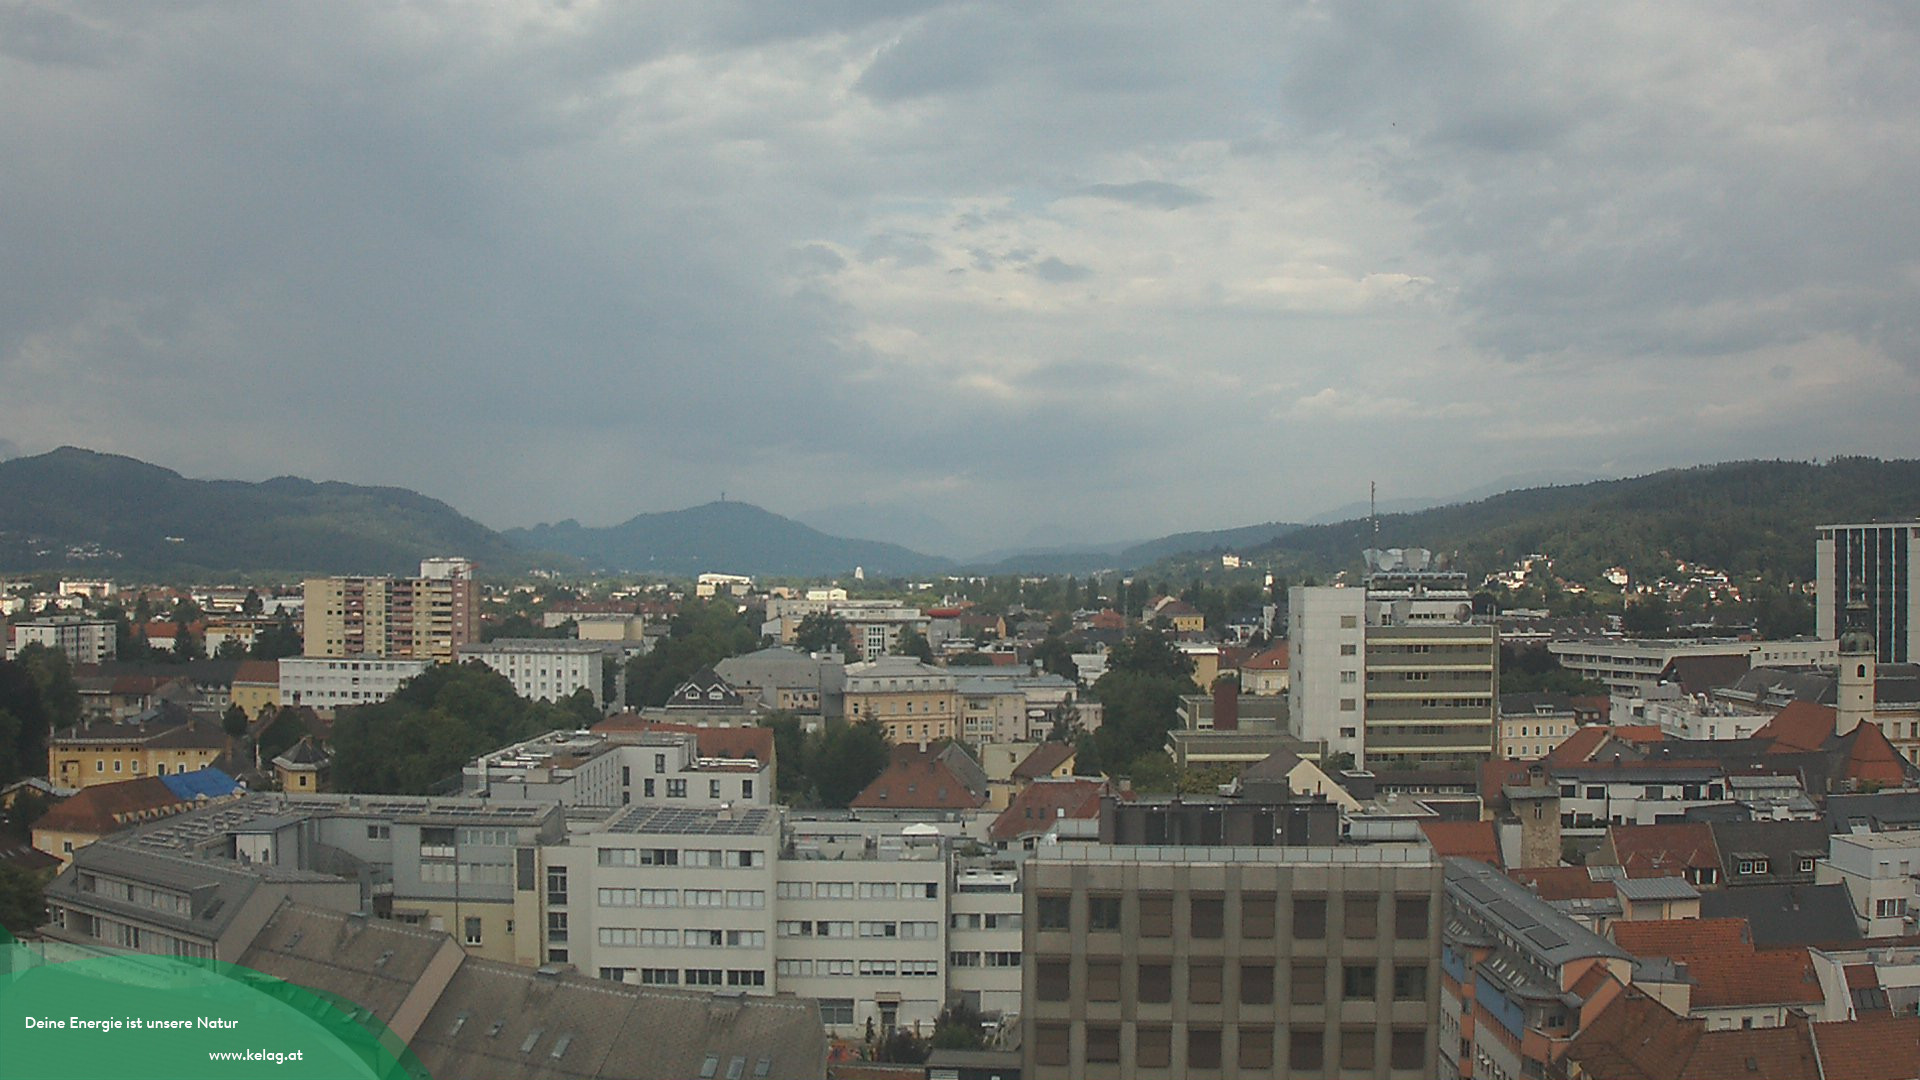 Klagenfurt Thu. 08:46